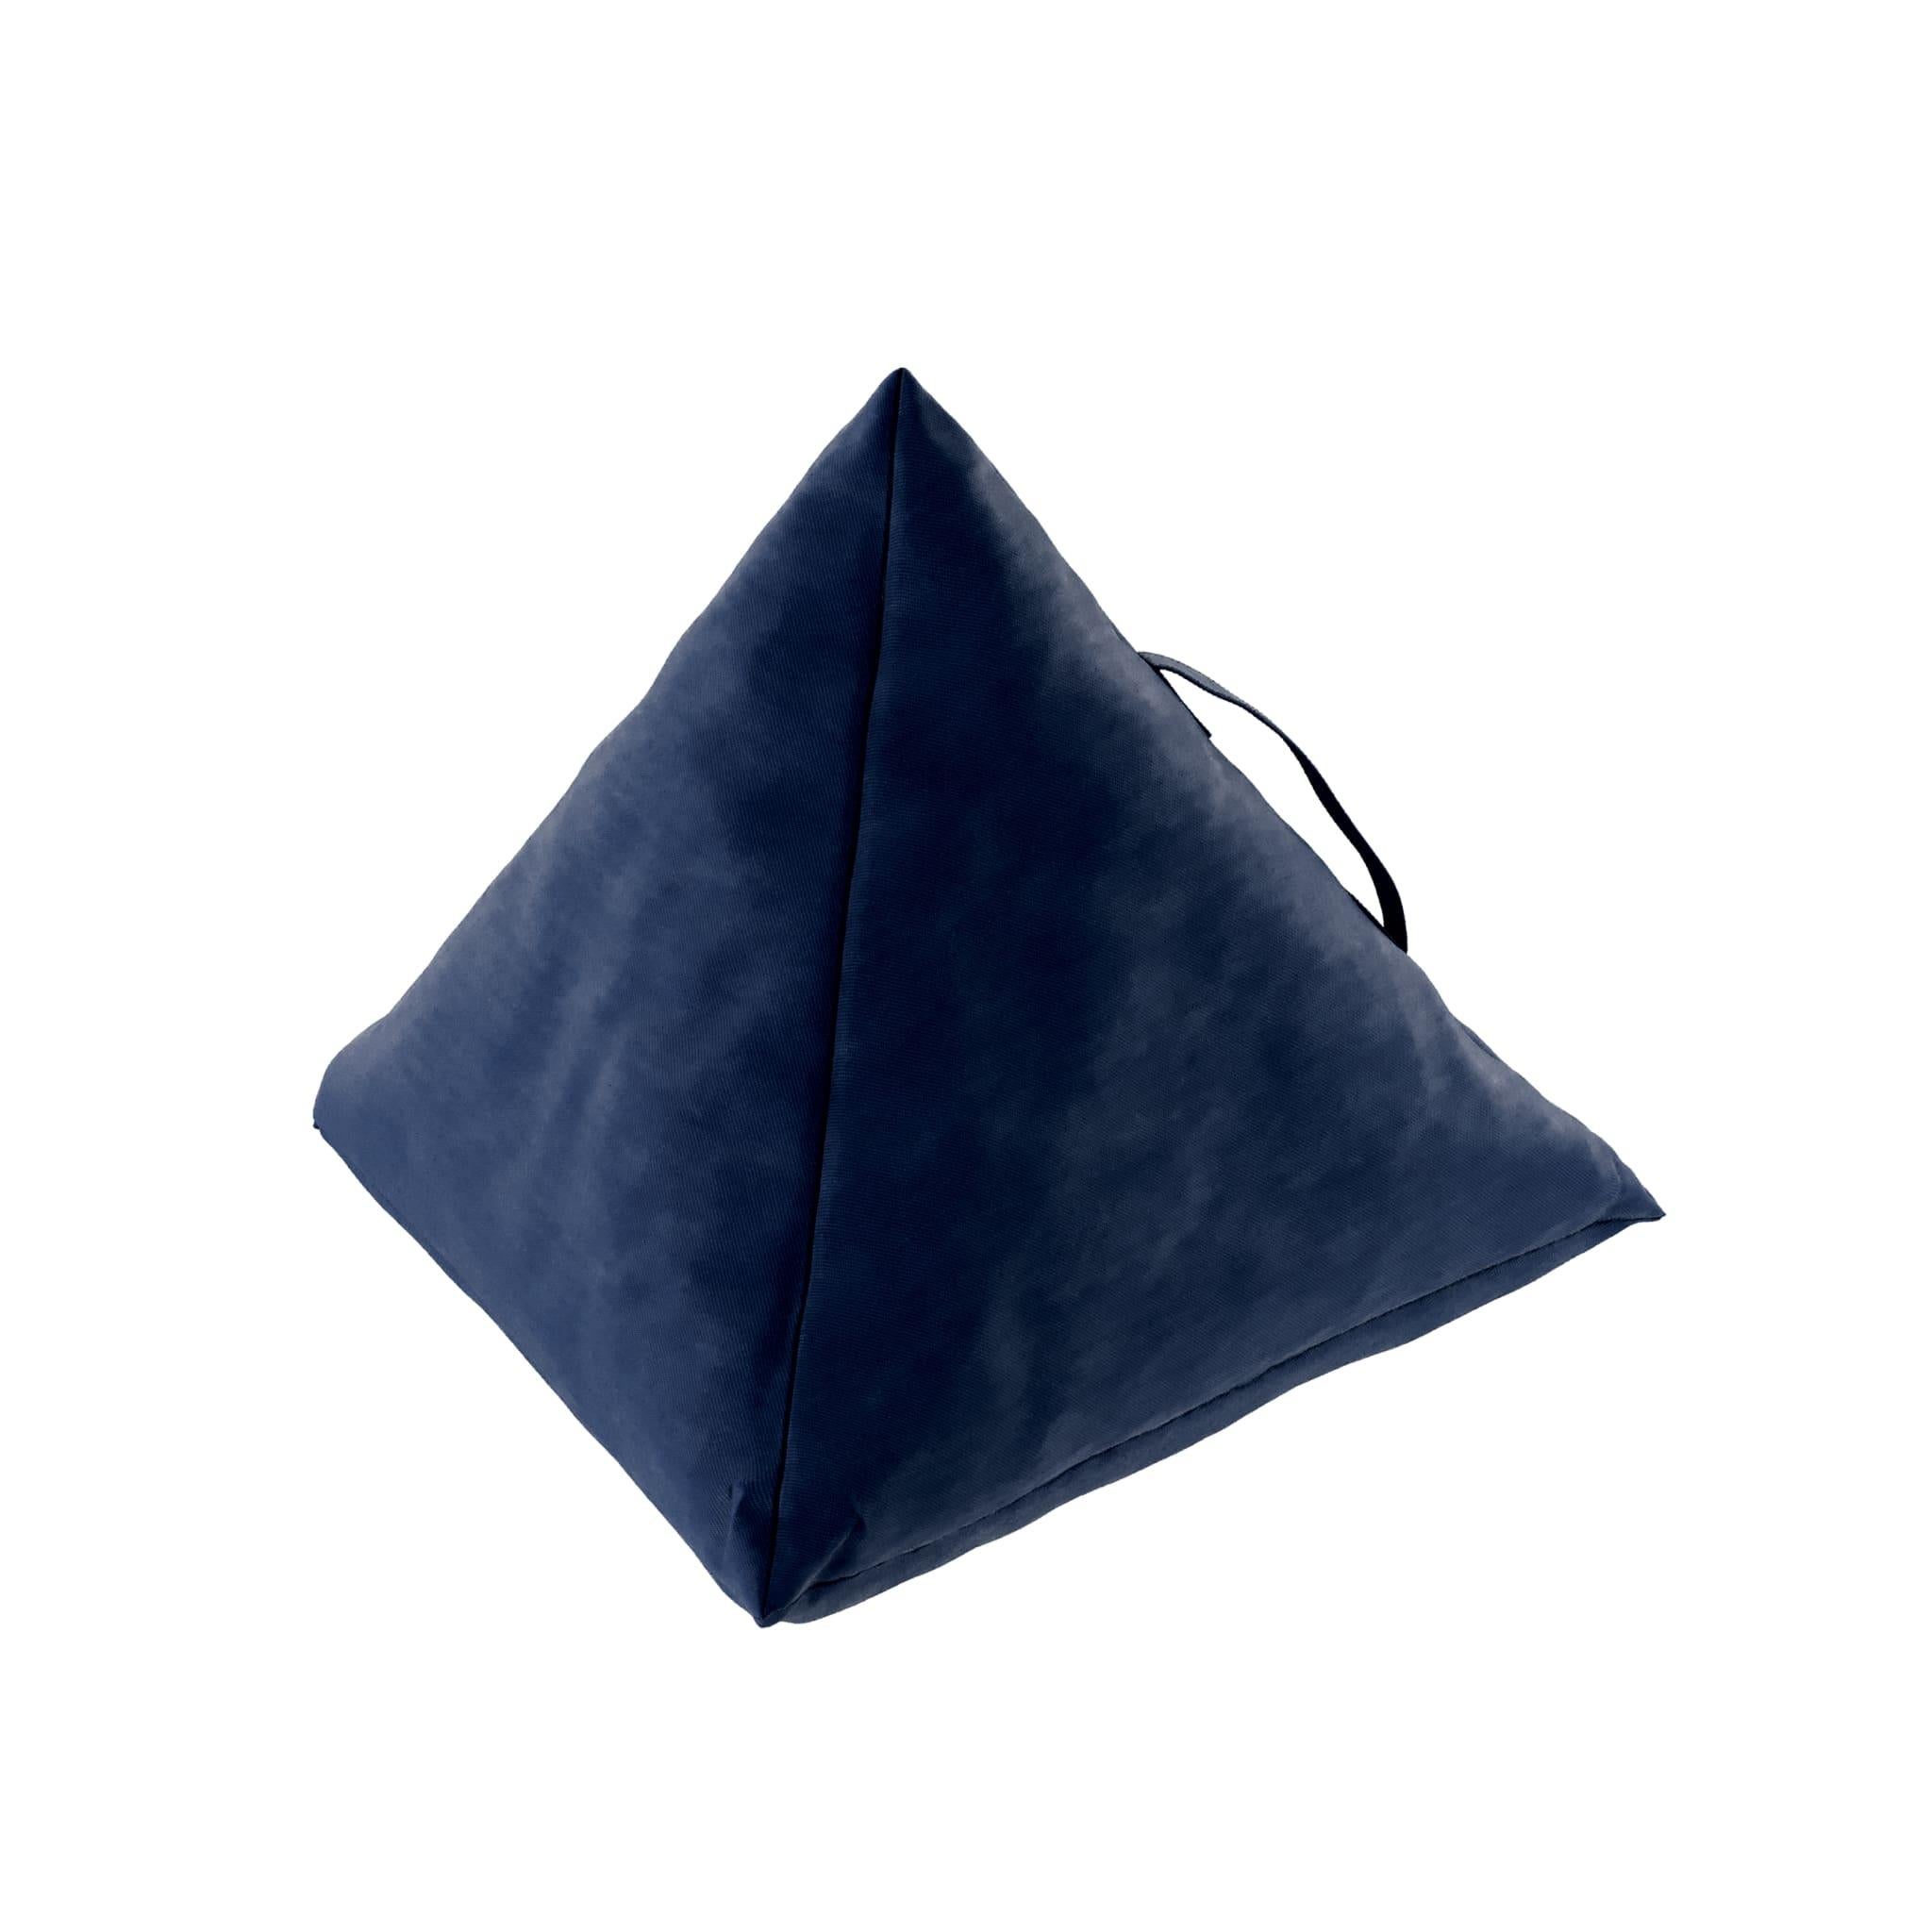 Portuguese Blue Triangle Blue-Shaped Pillow, Modern Decorative Eye-Catching Cushion